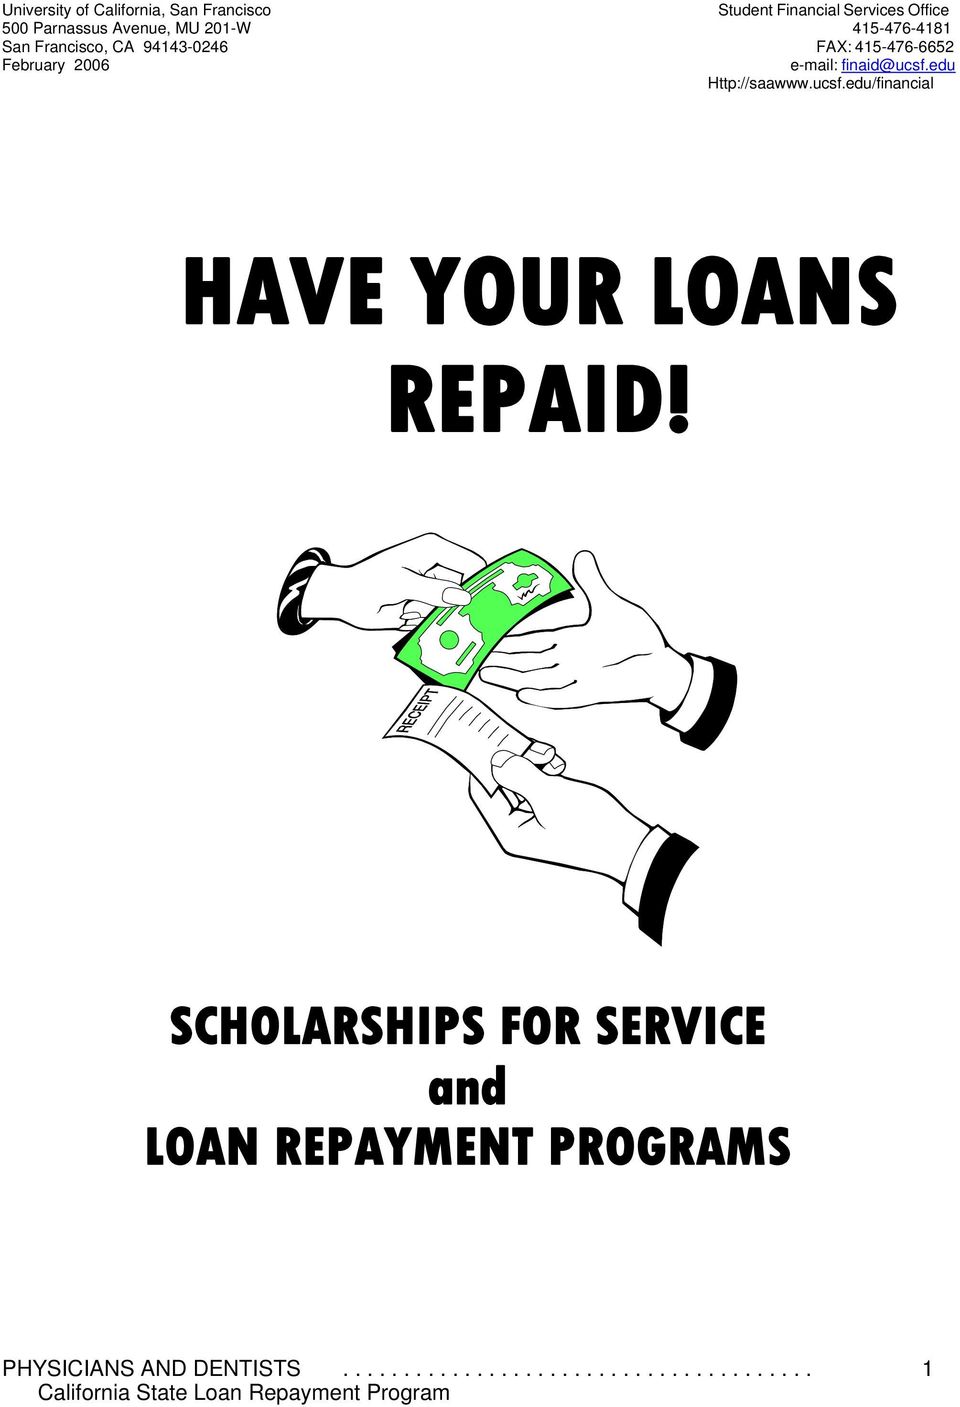 edu Http://saawww.ucsf.edu/financial HAVE YOUR LOANS REPAID!